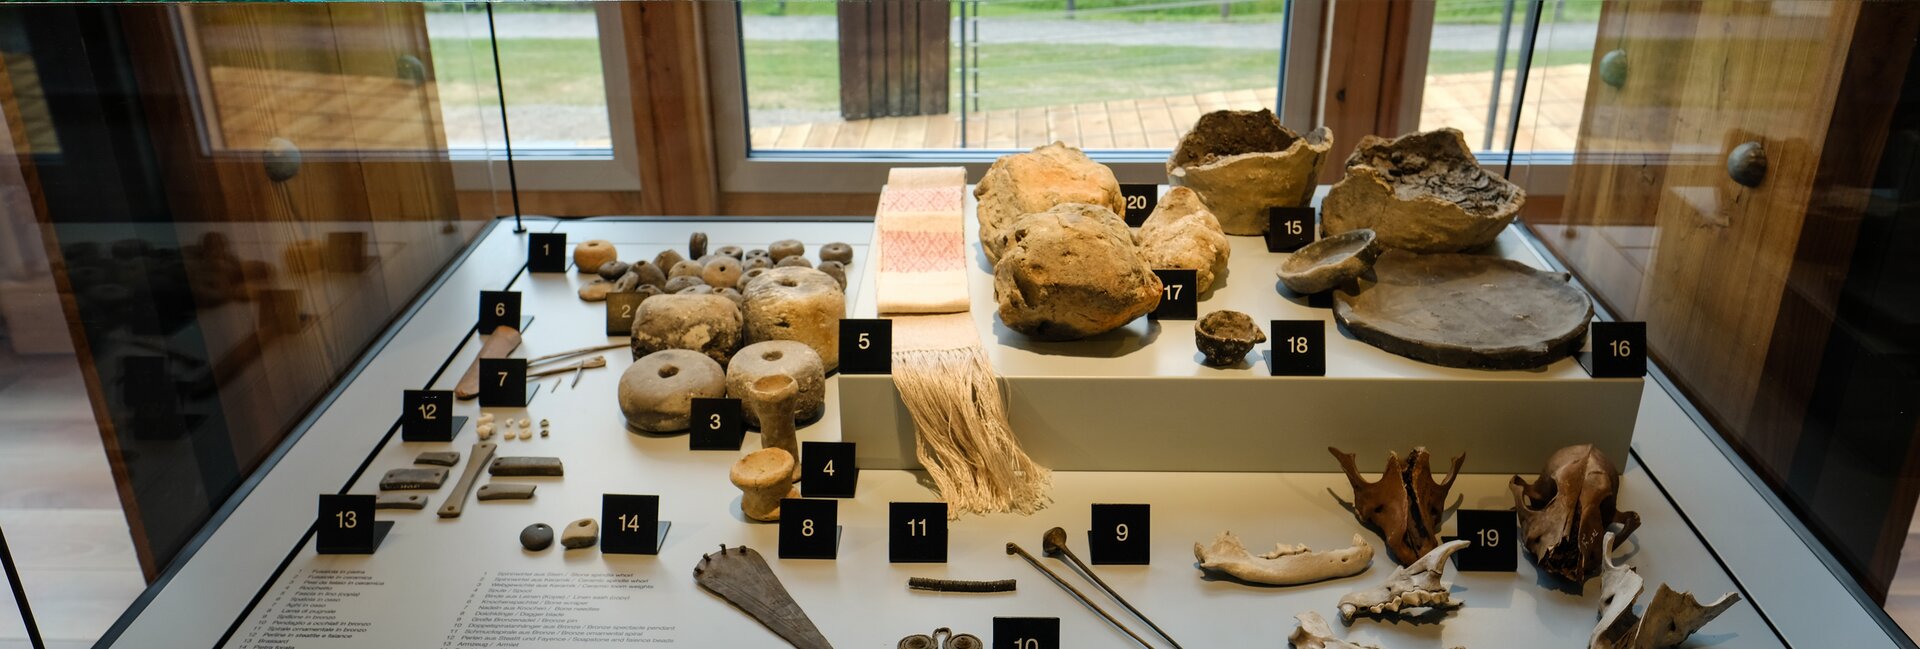 Pfahlbautenmuseum am Ledro-See